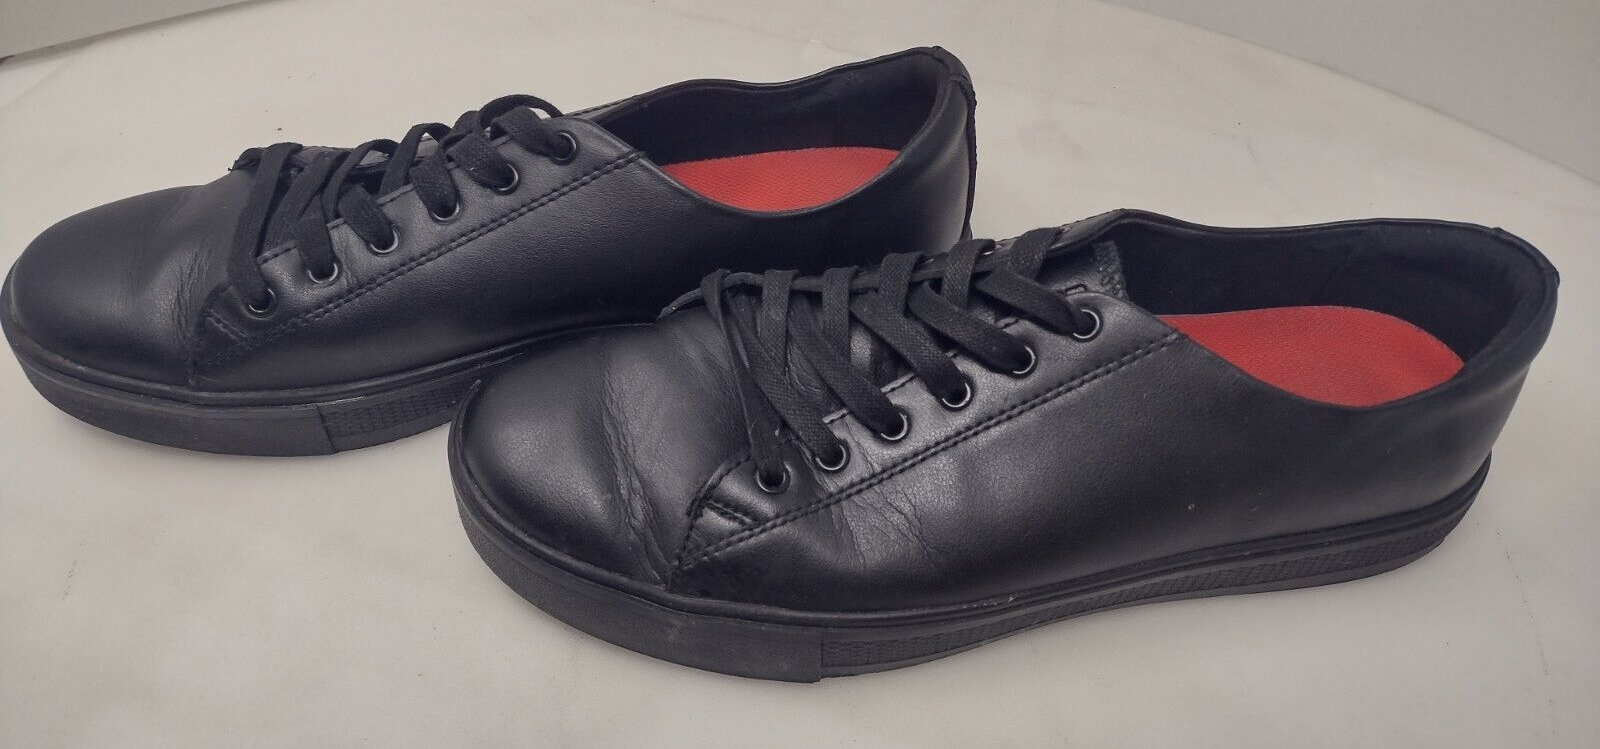 Shoes For Crews Slip Resistant Low Rise Converse Type Canvas Shoe 36111 |  eBay